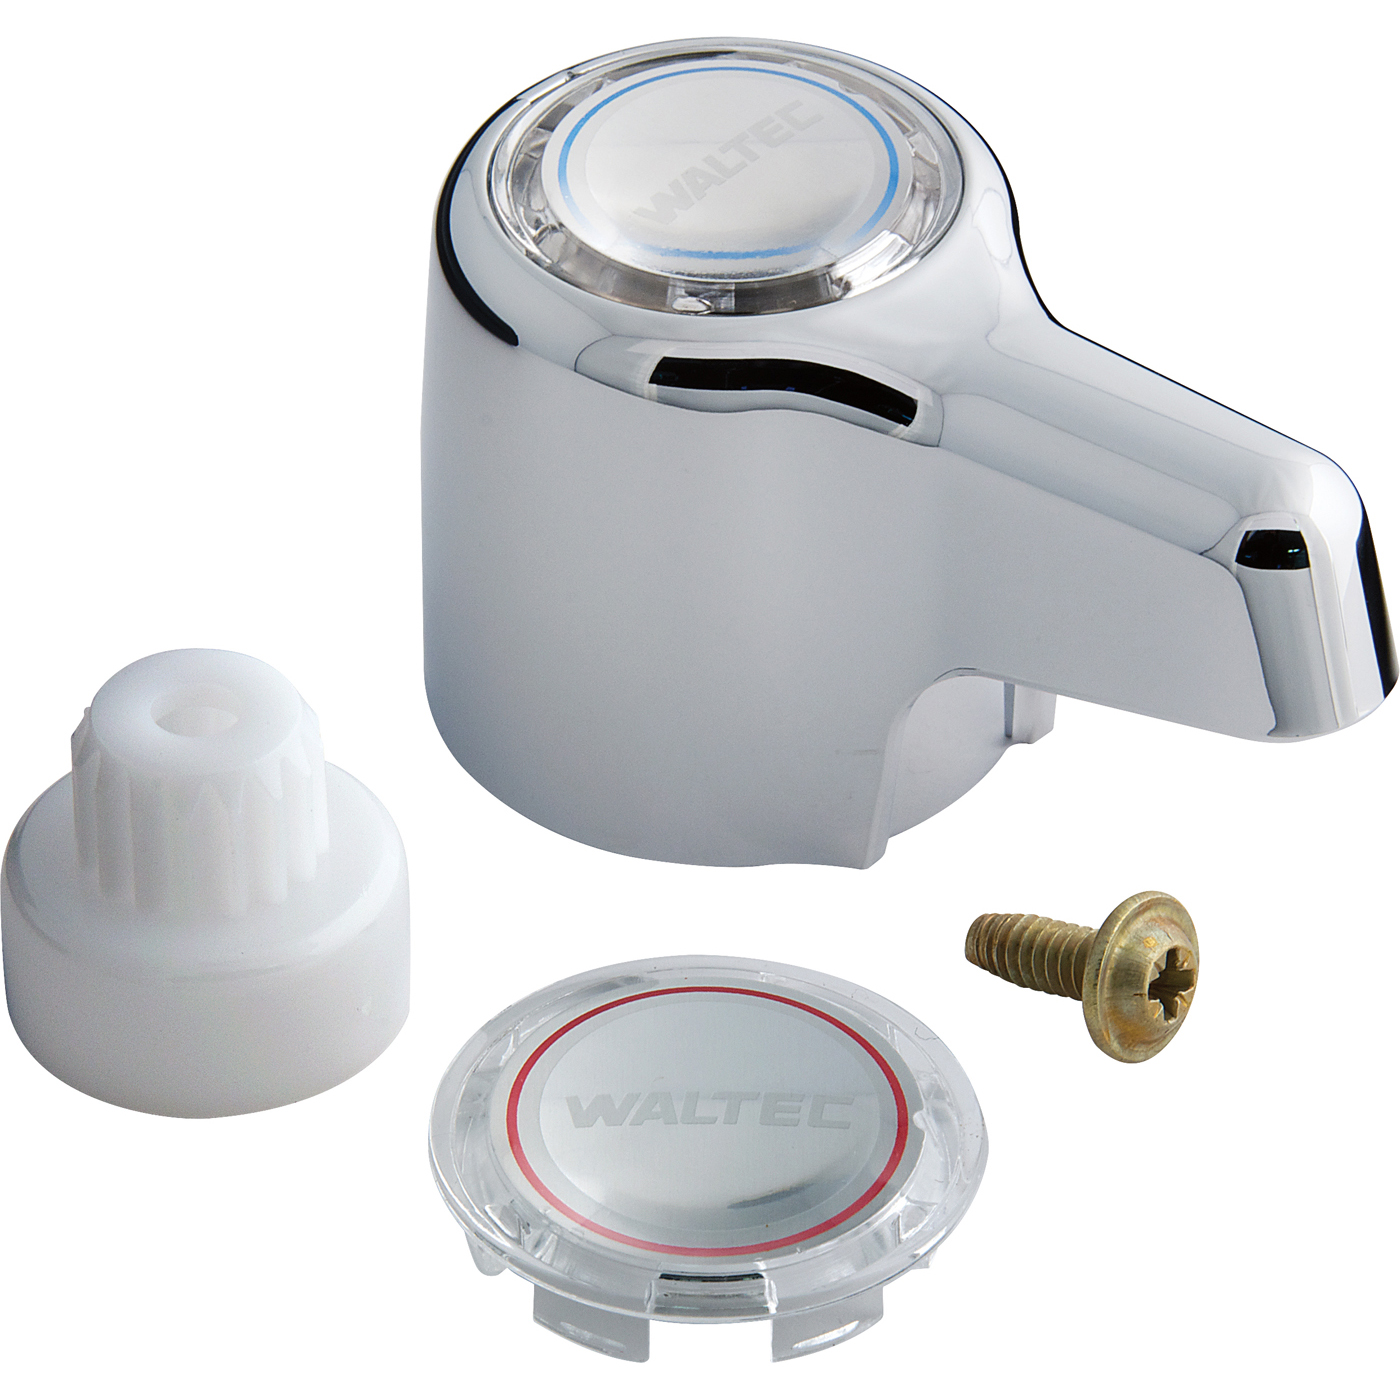 Waltec® Flotrol(TM) dome handle Kit - Master Plumber®